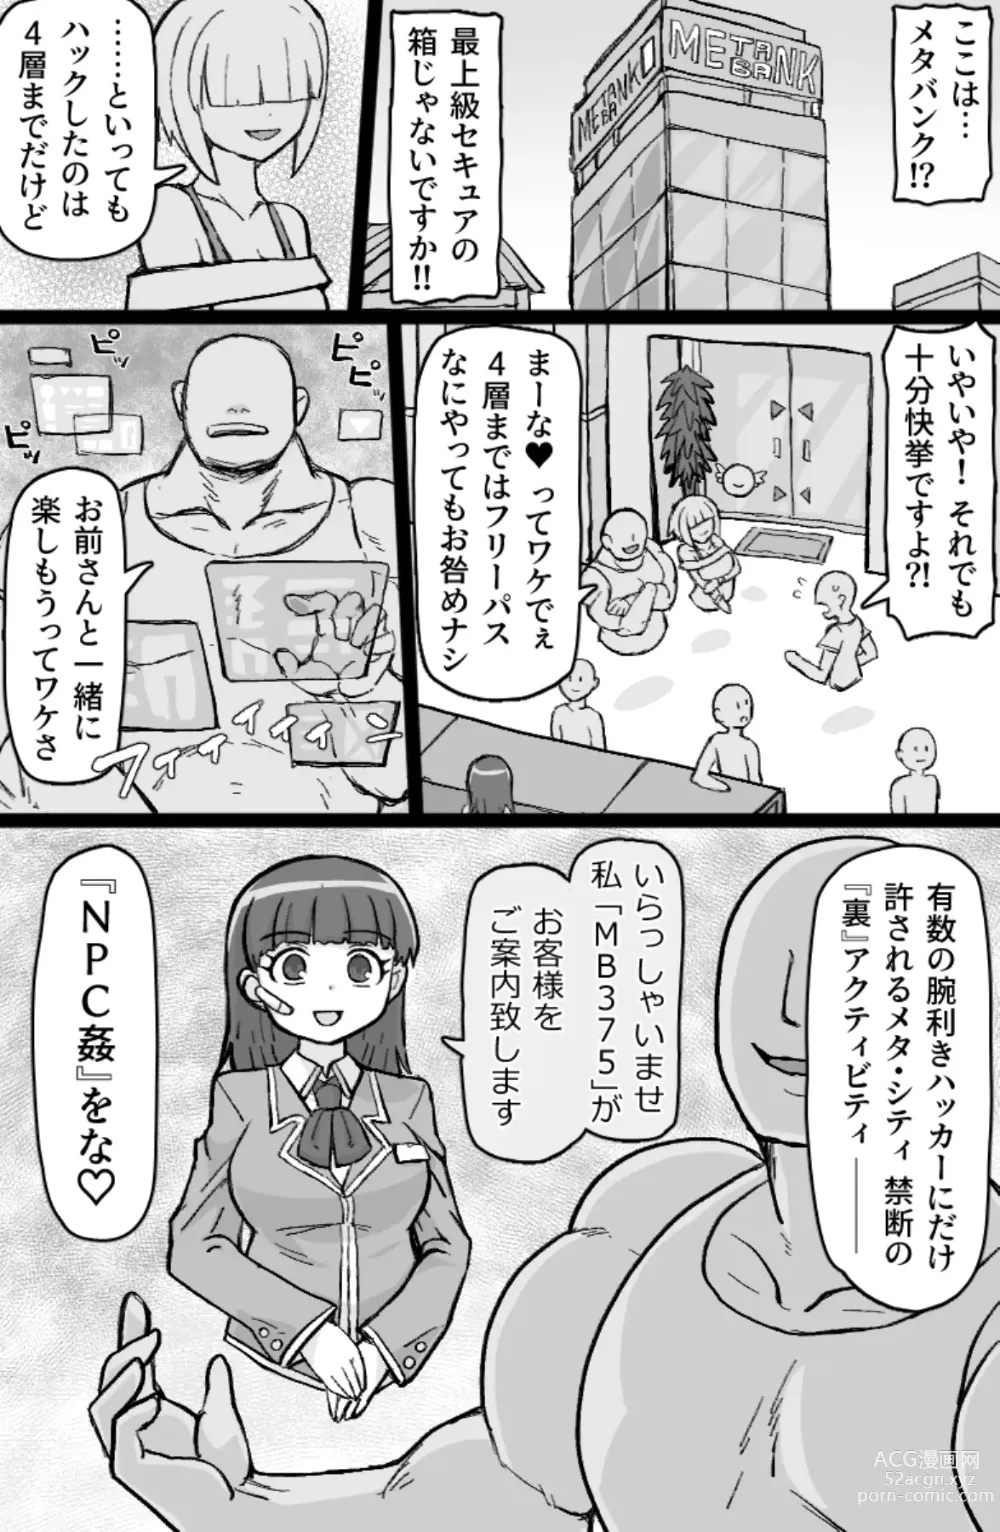 Page 4 of doujinshi Hataraku! NPCFxxk